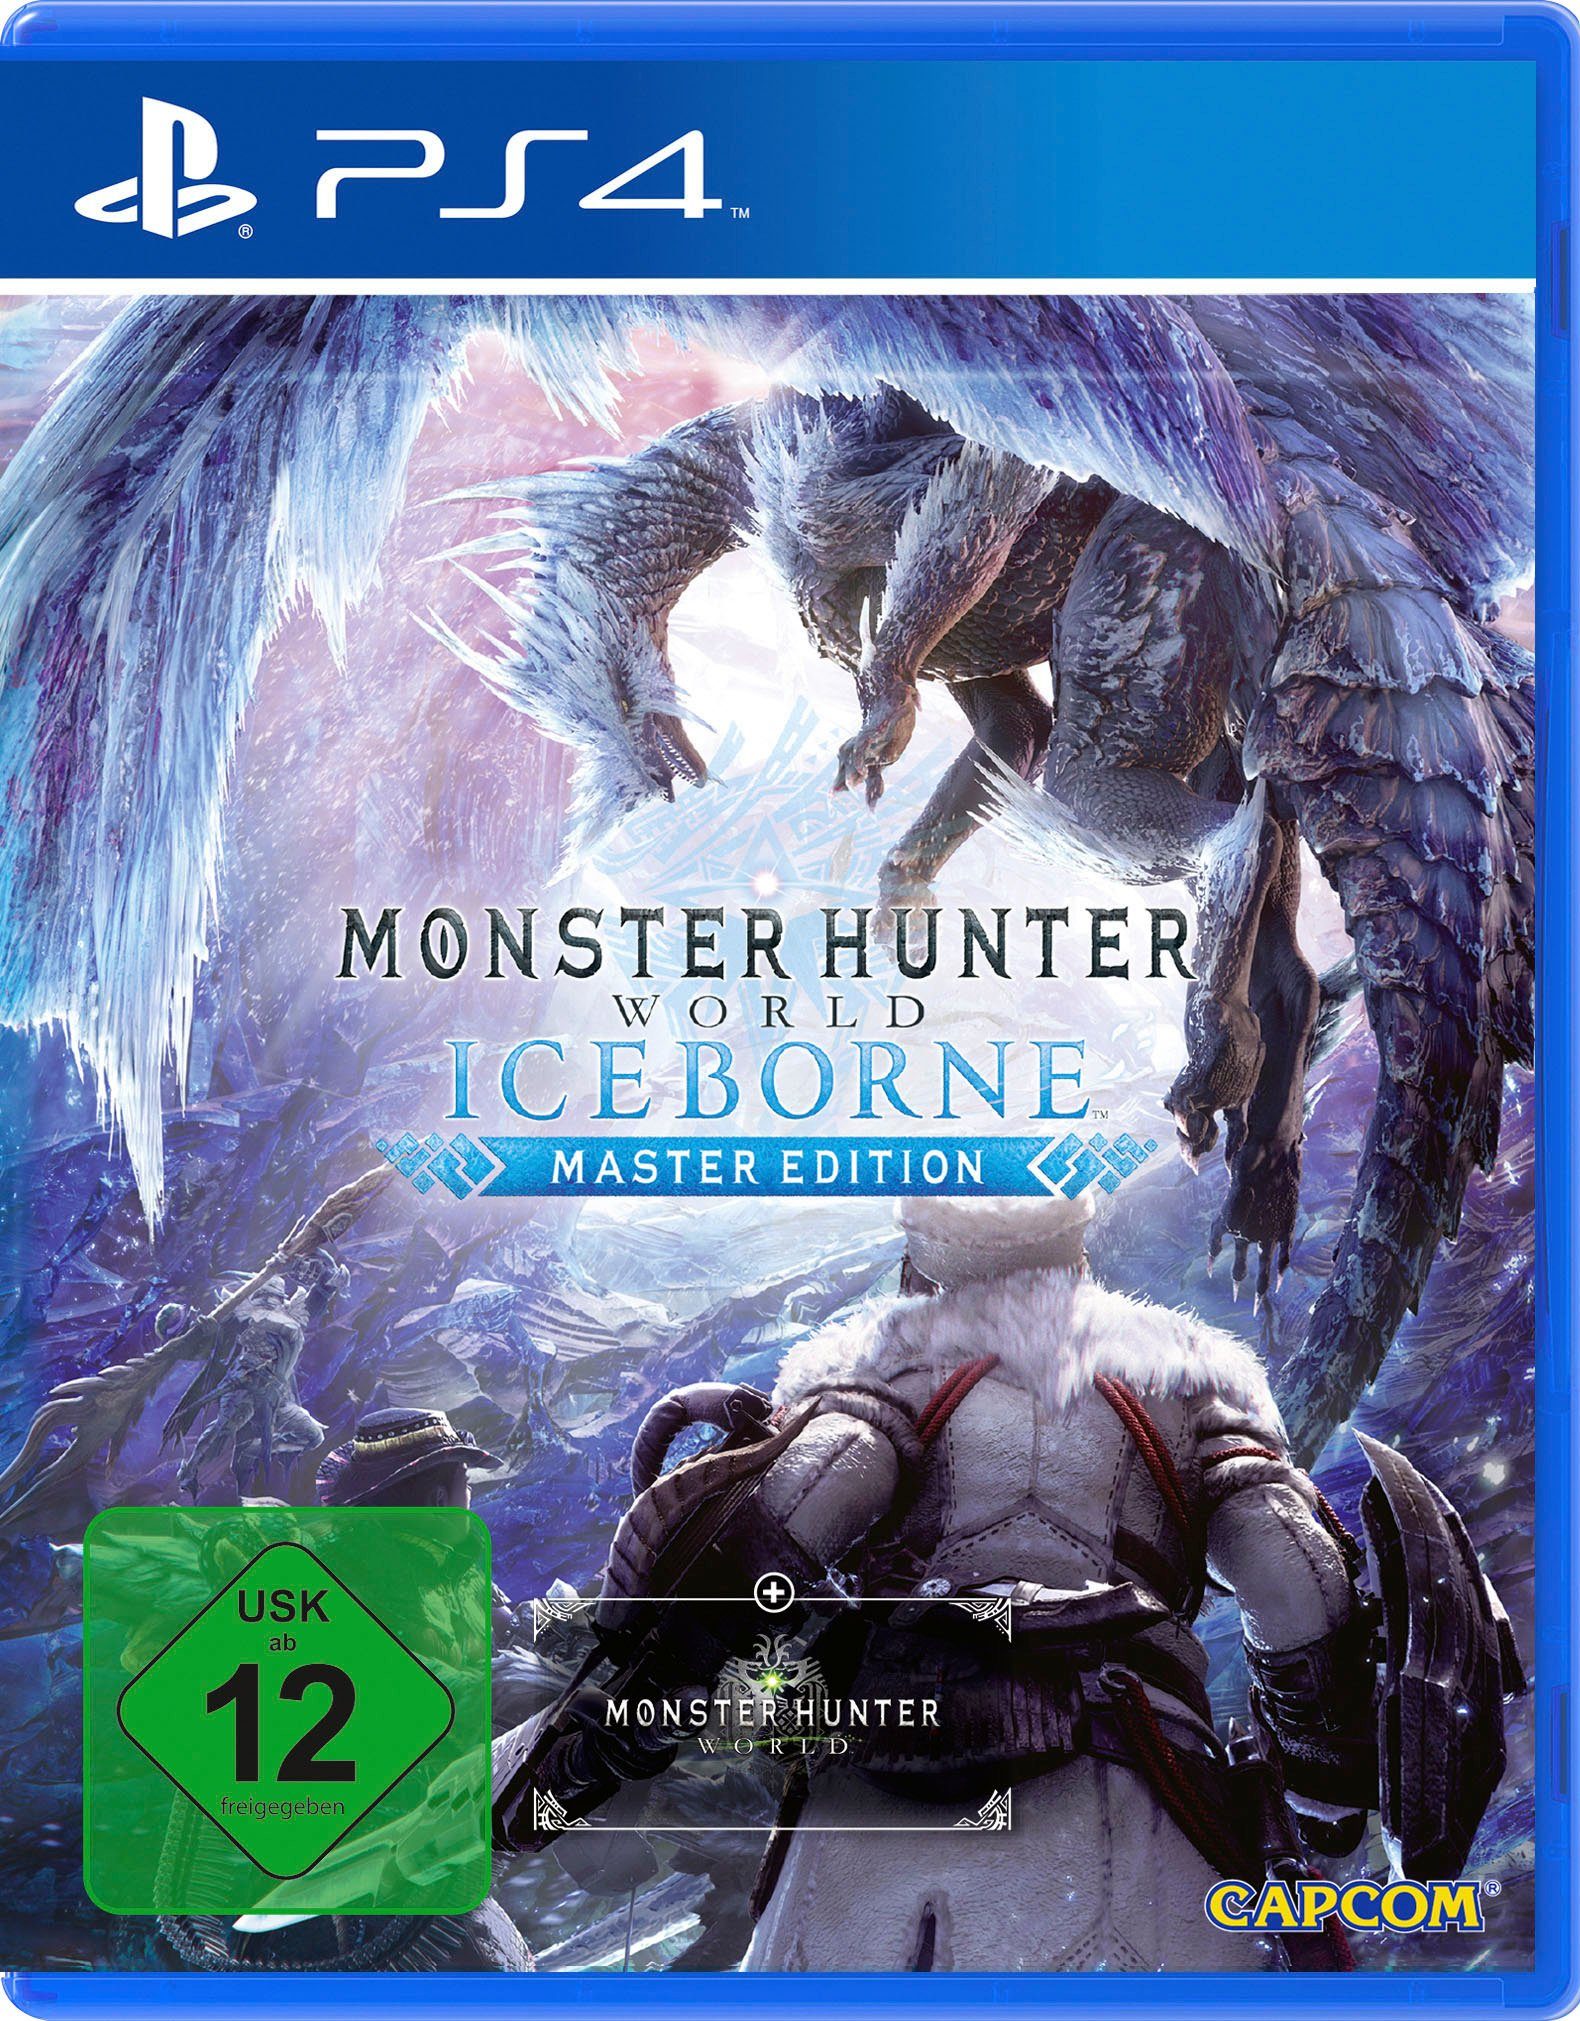 [Herausfordernde Ultra-Low-Preise!] Capcom Monster Hunter World: Iceborne PlayStation 4